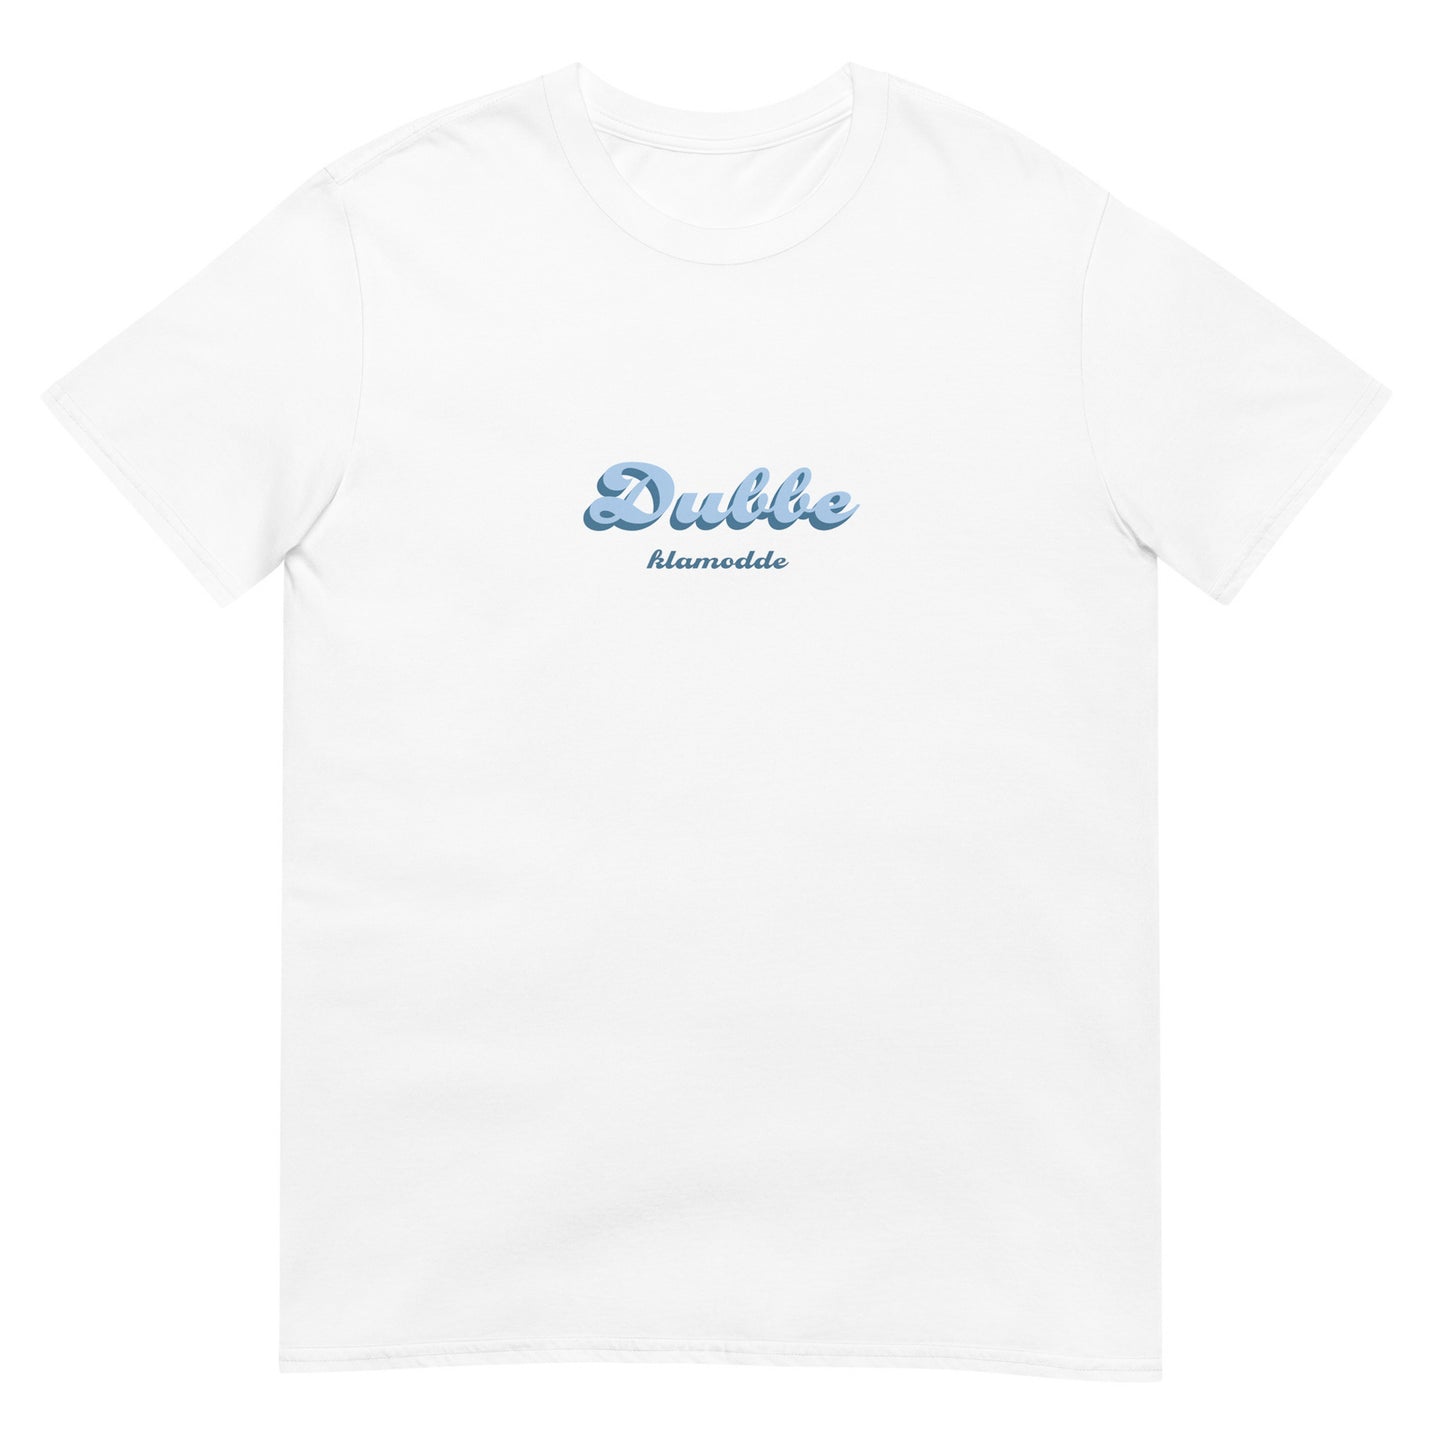 Dubbe Vintage T-Shirt - DUBBEKLAMODDE